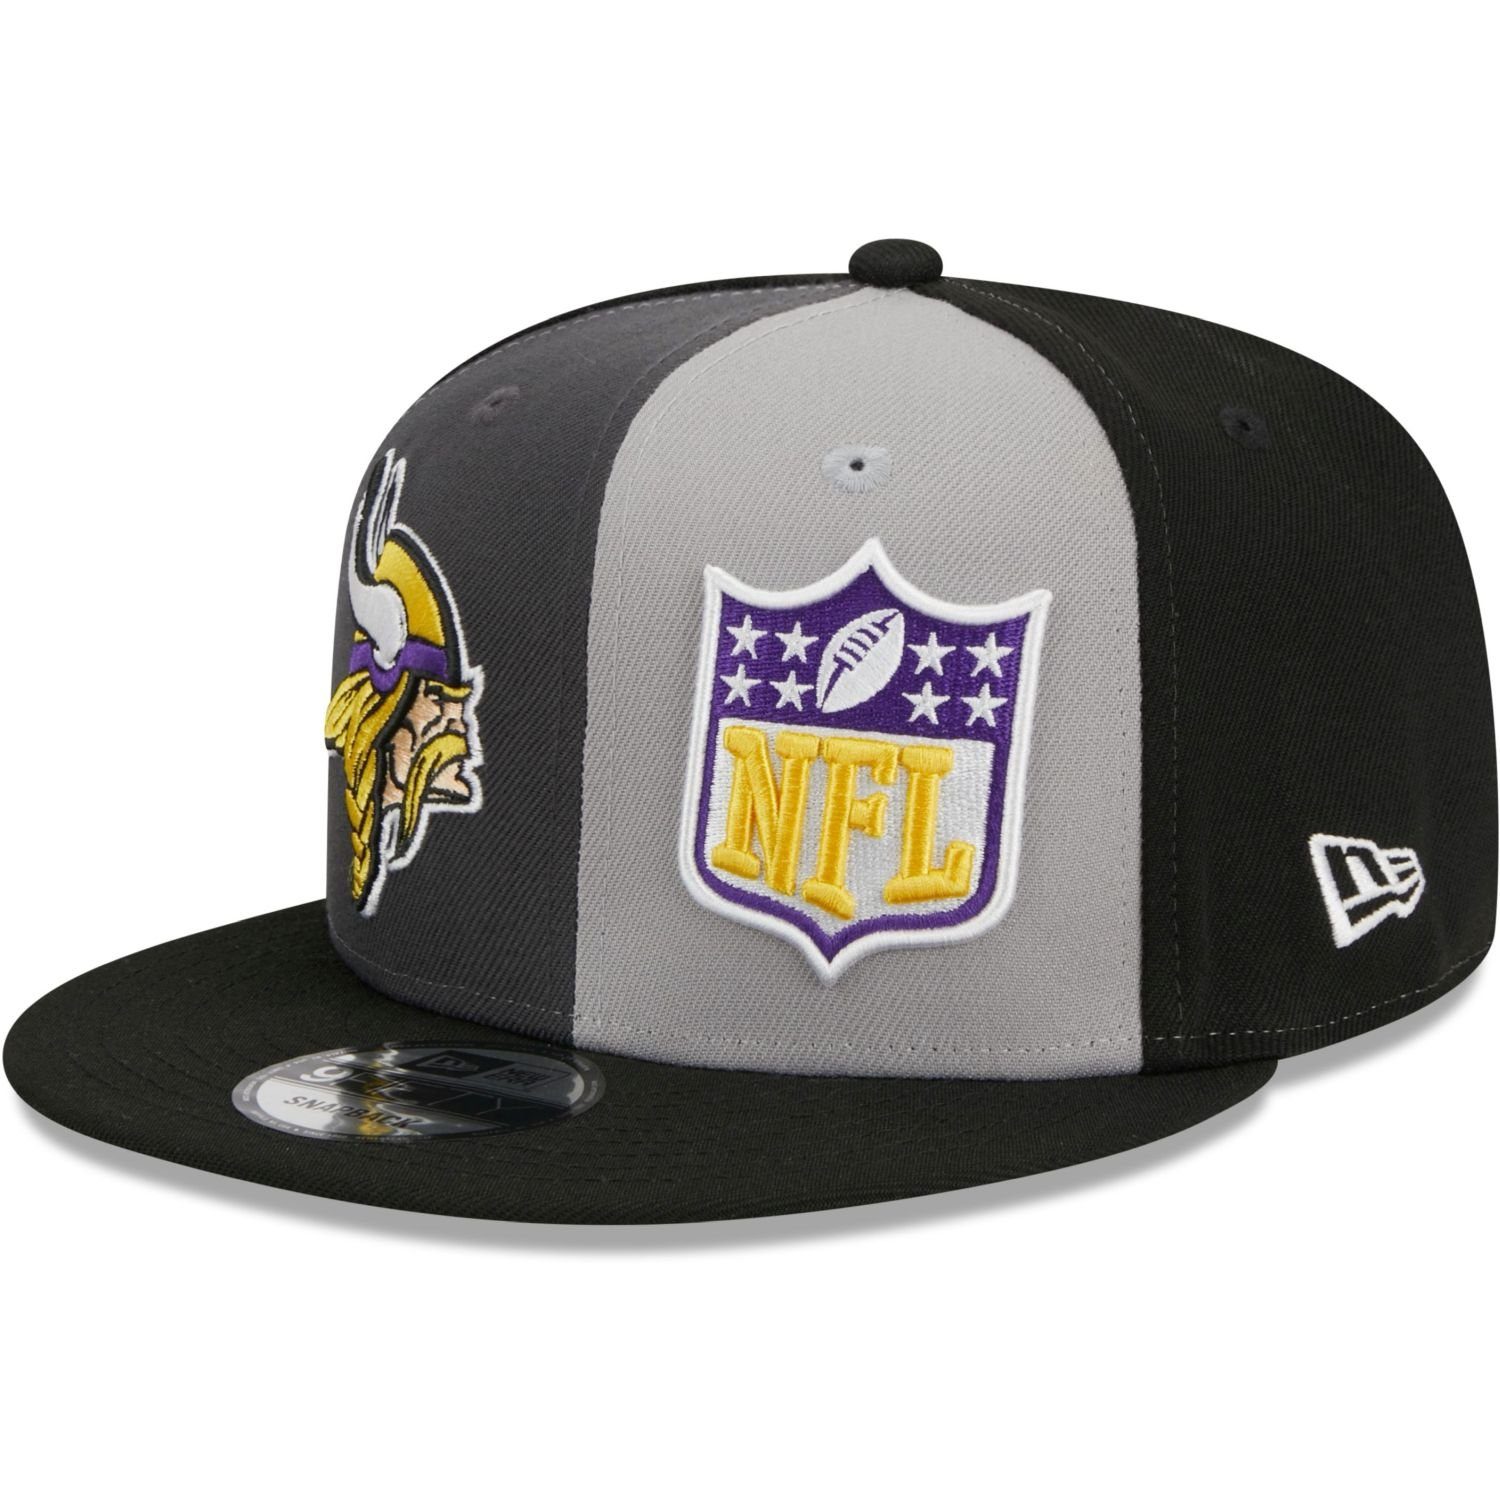 Supergünstiger Preis jetzt verfügbar! New Era Snapback Cap 9Fifty Minnesota Vikings Sideline